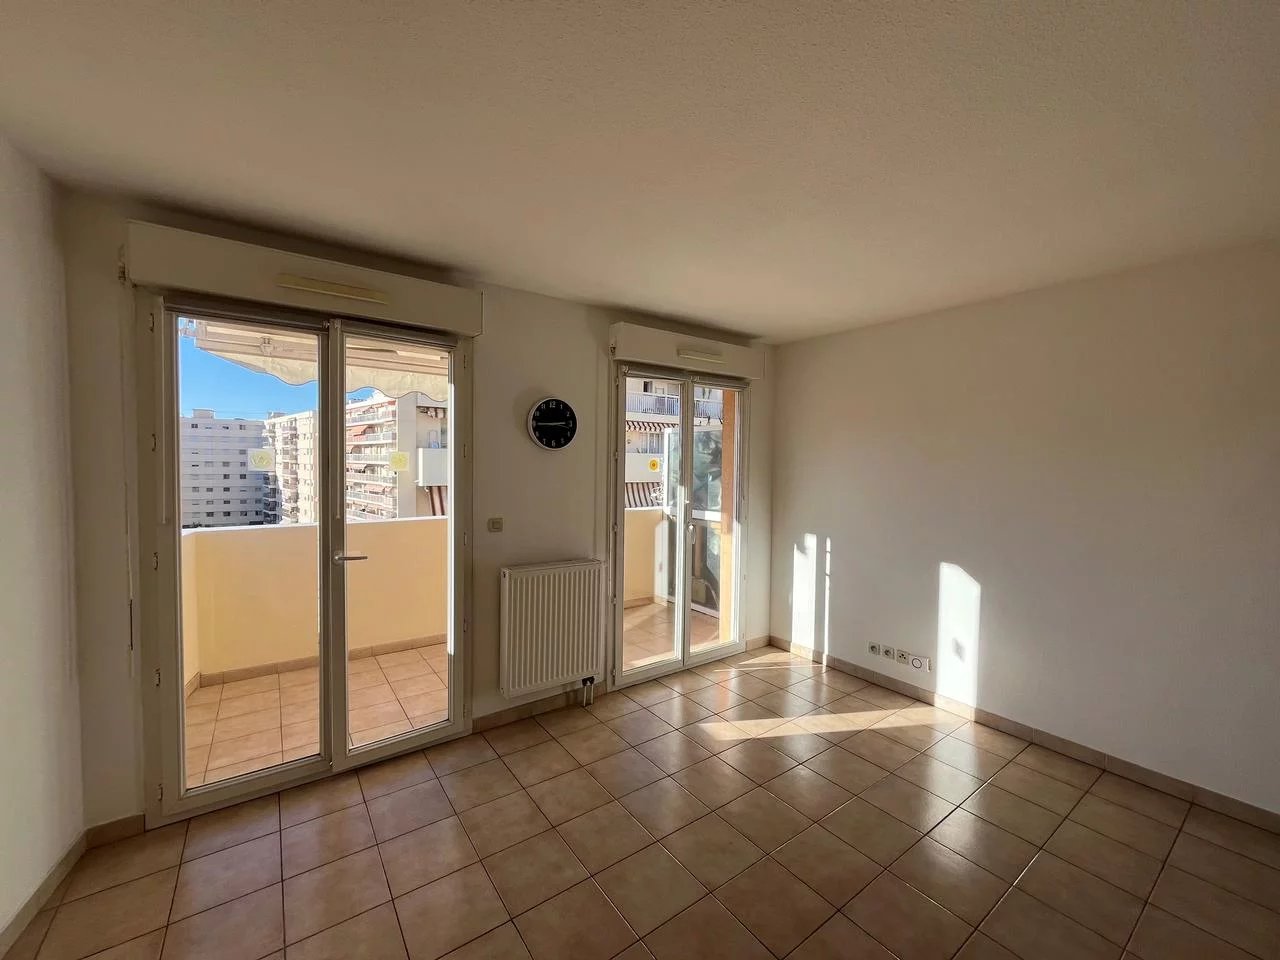 Appartement  3 Locali 62m2  In vendita   245 000 €